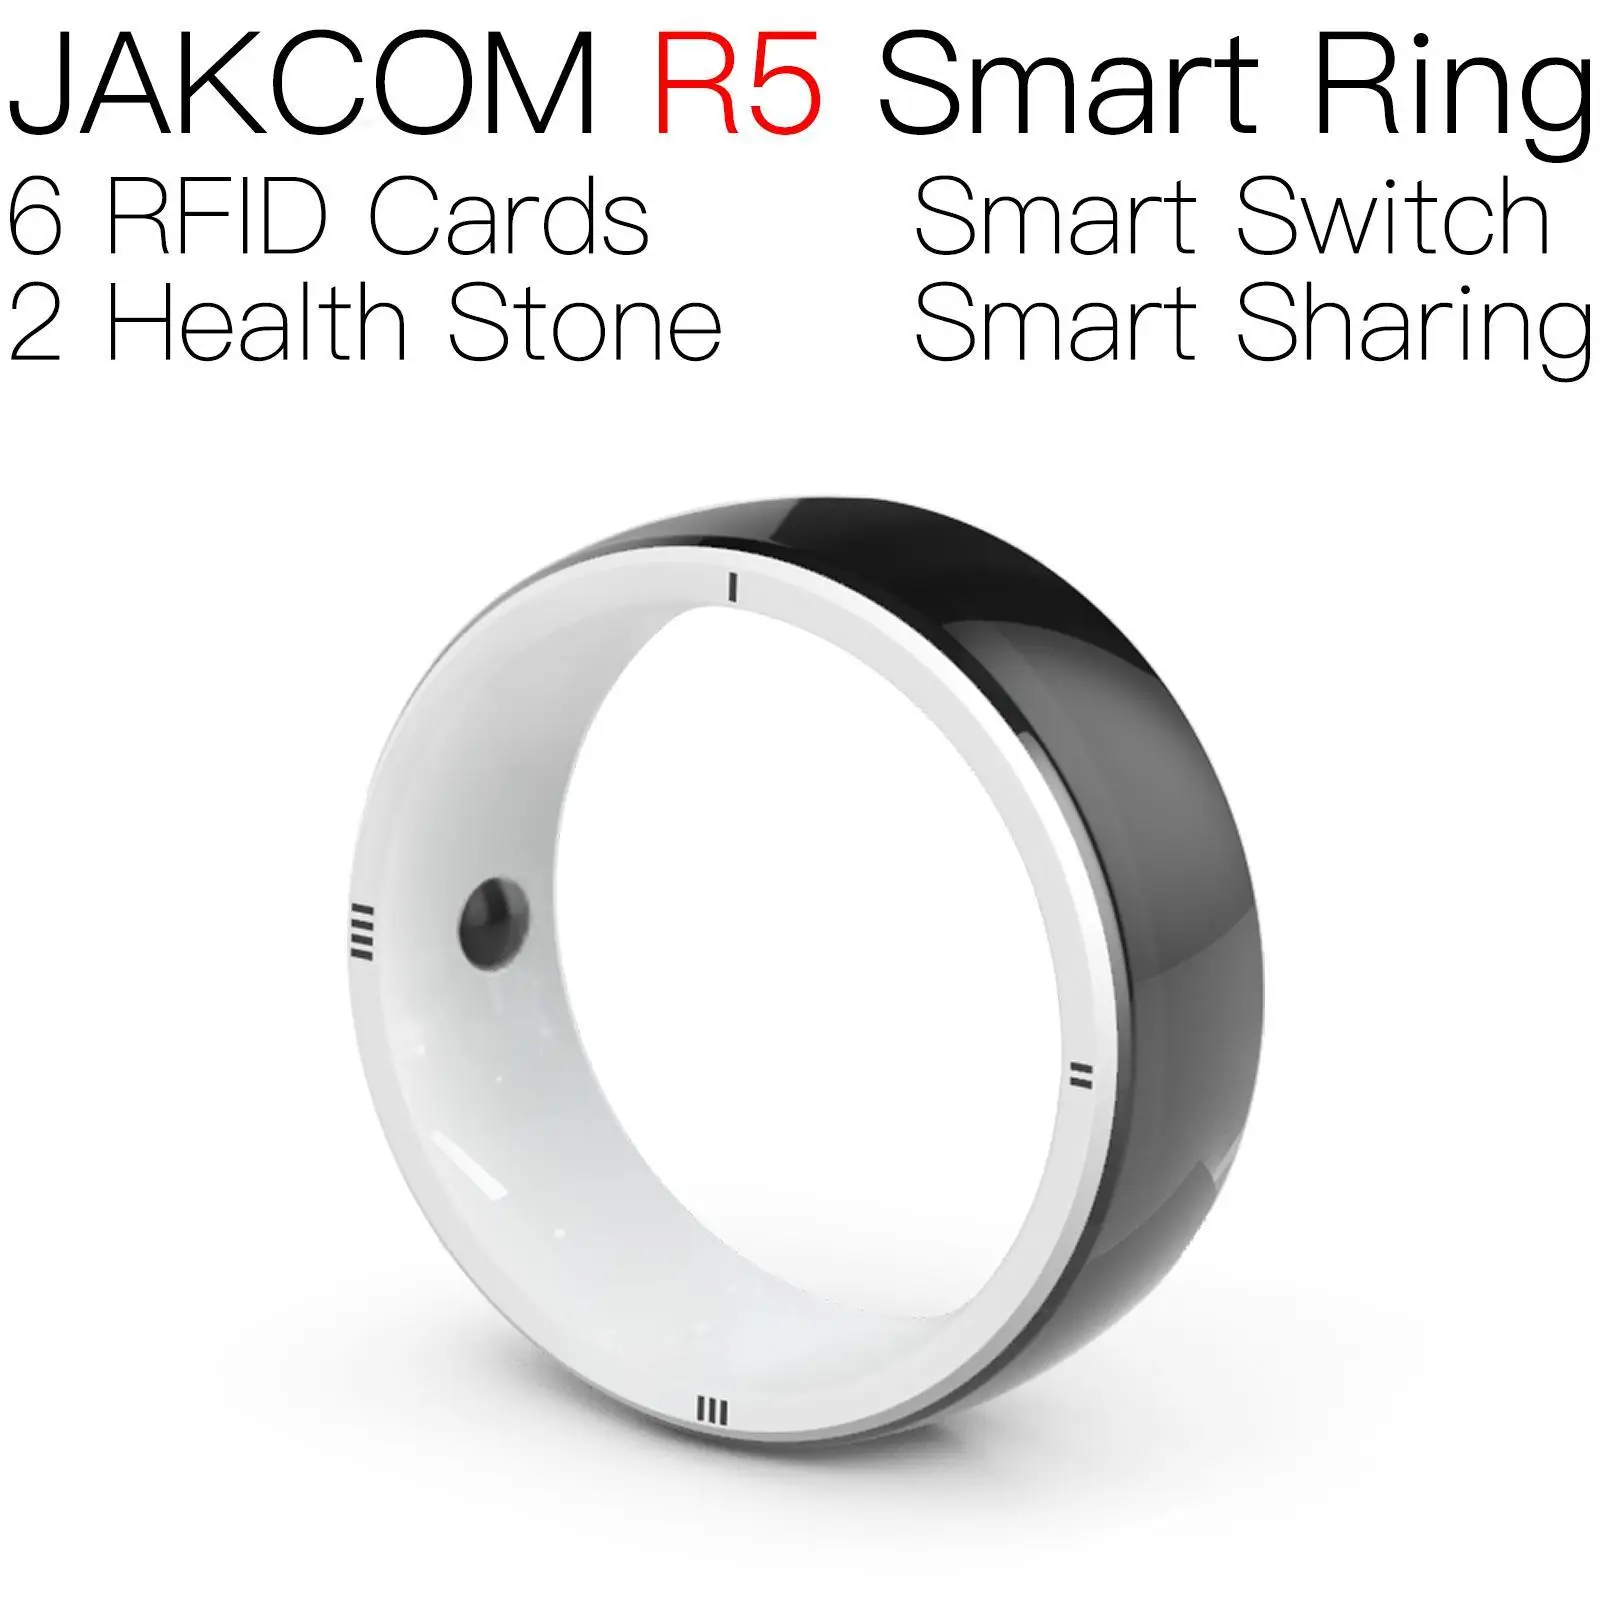 

JAKCOM R5 Smart Ring New arrival as horizons rewritable 125khz rfid tag e microchip pic paper nfc sh smart card